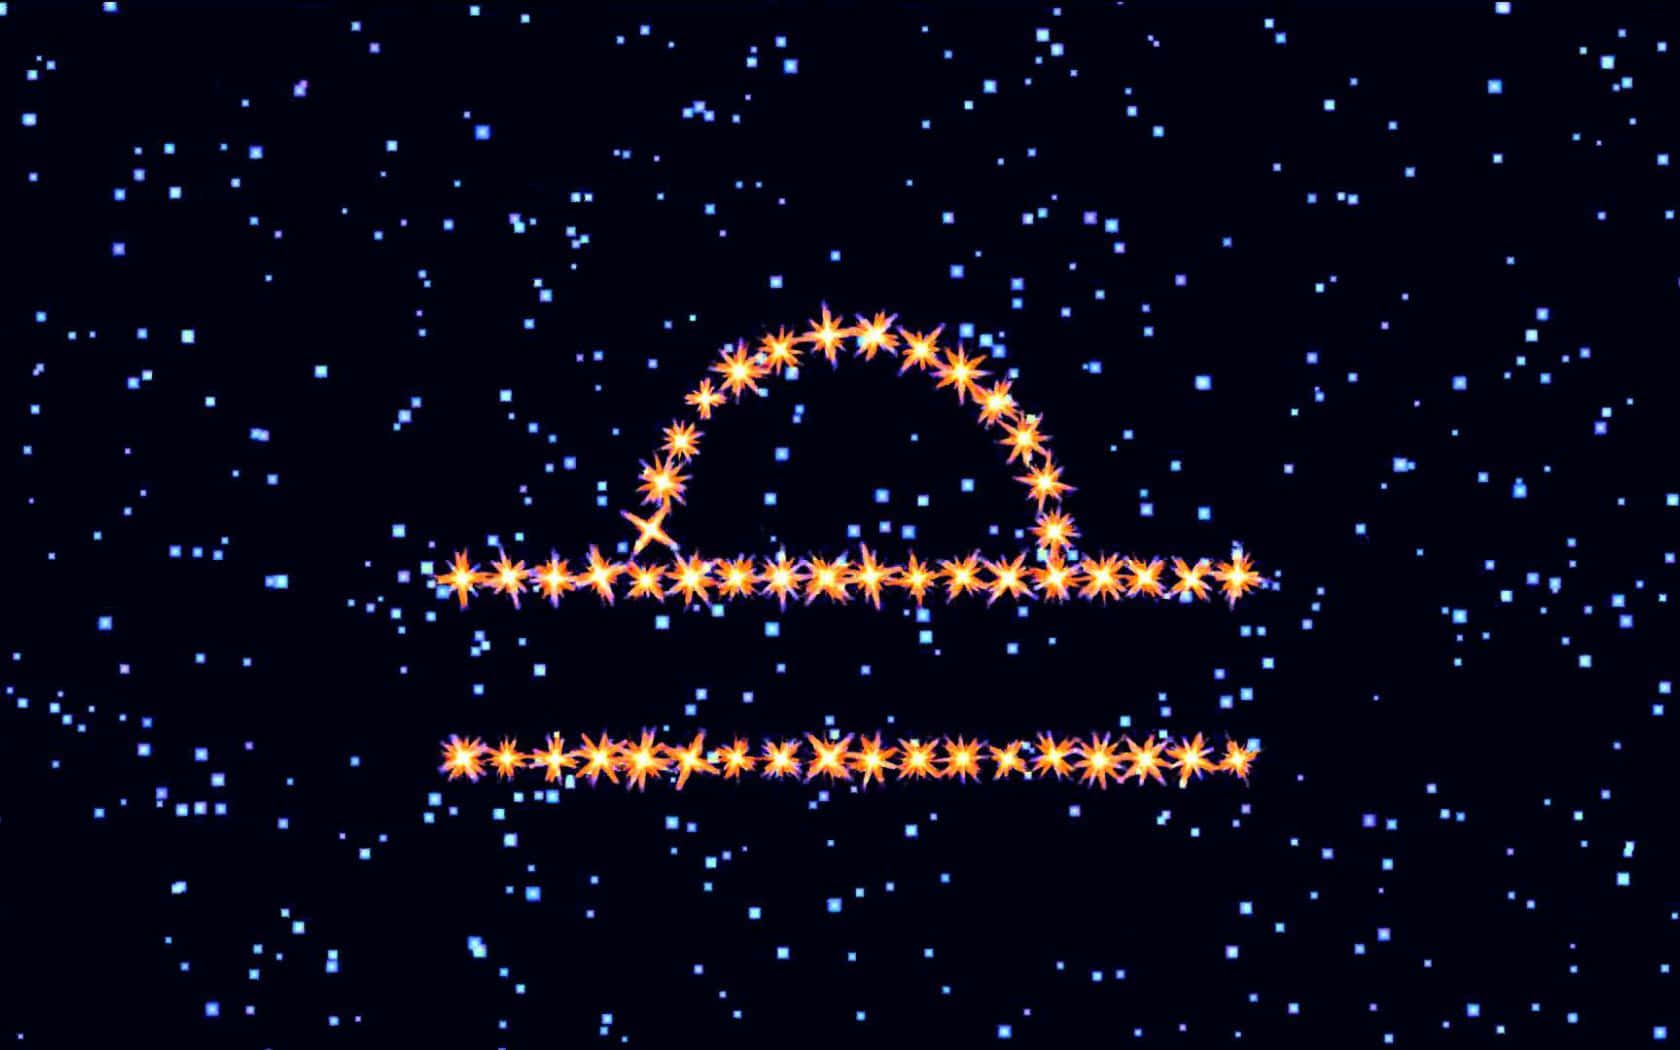 Stunning Libra zodiac sign artwork with glowing balance scales